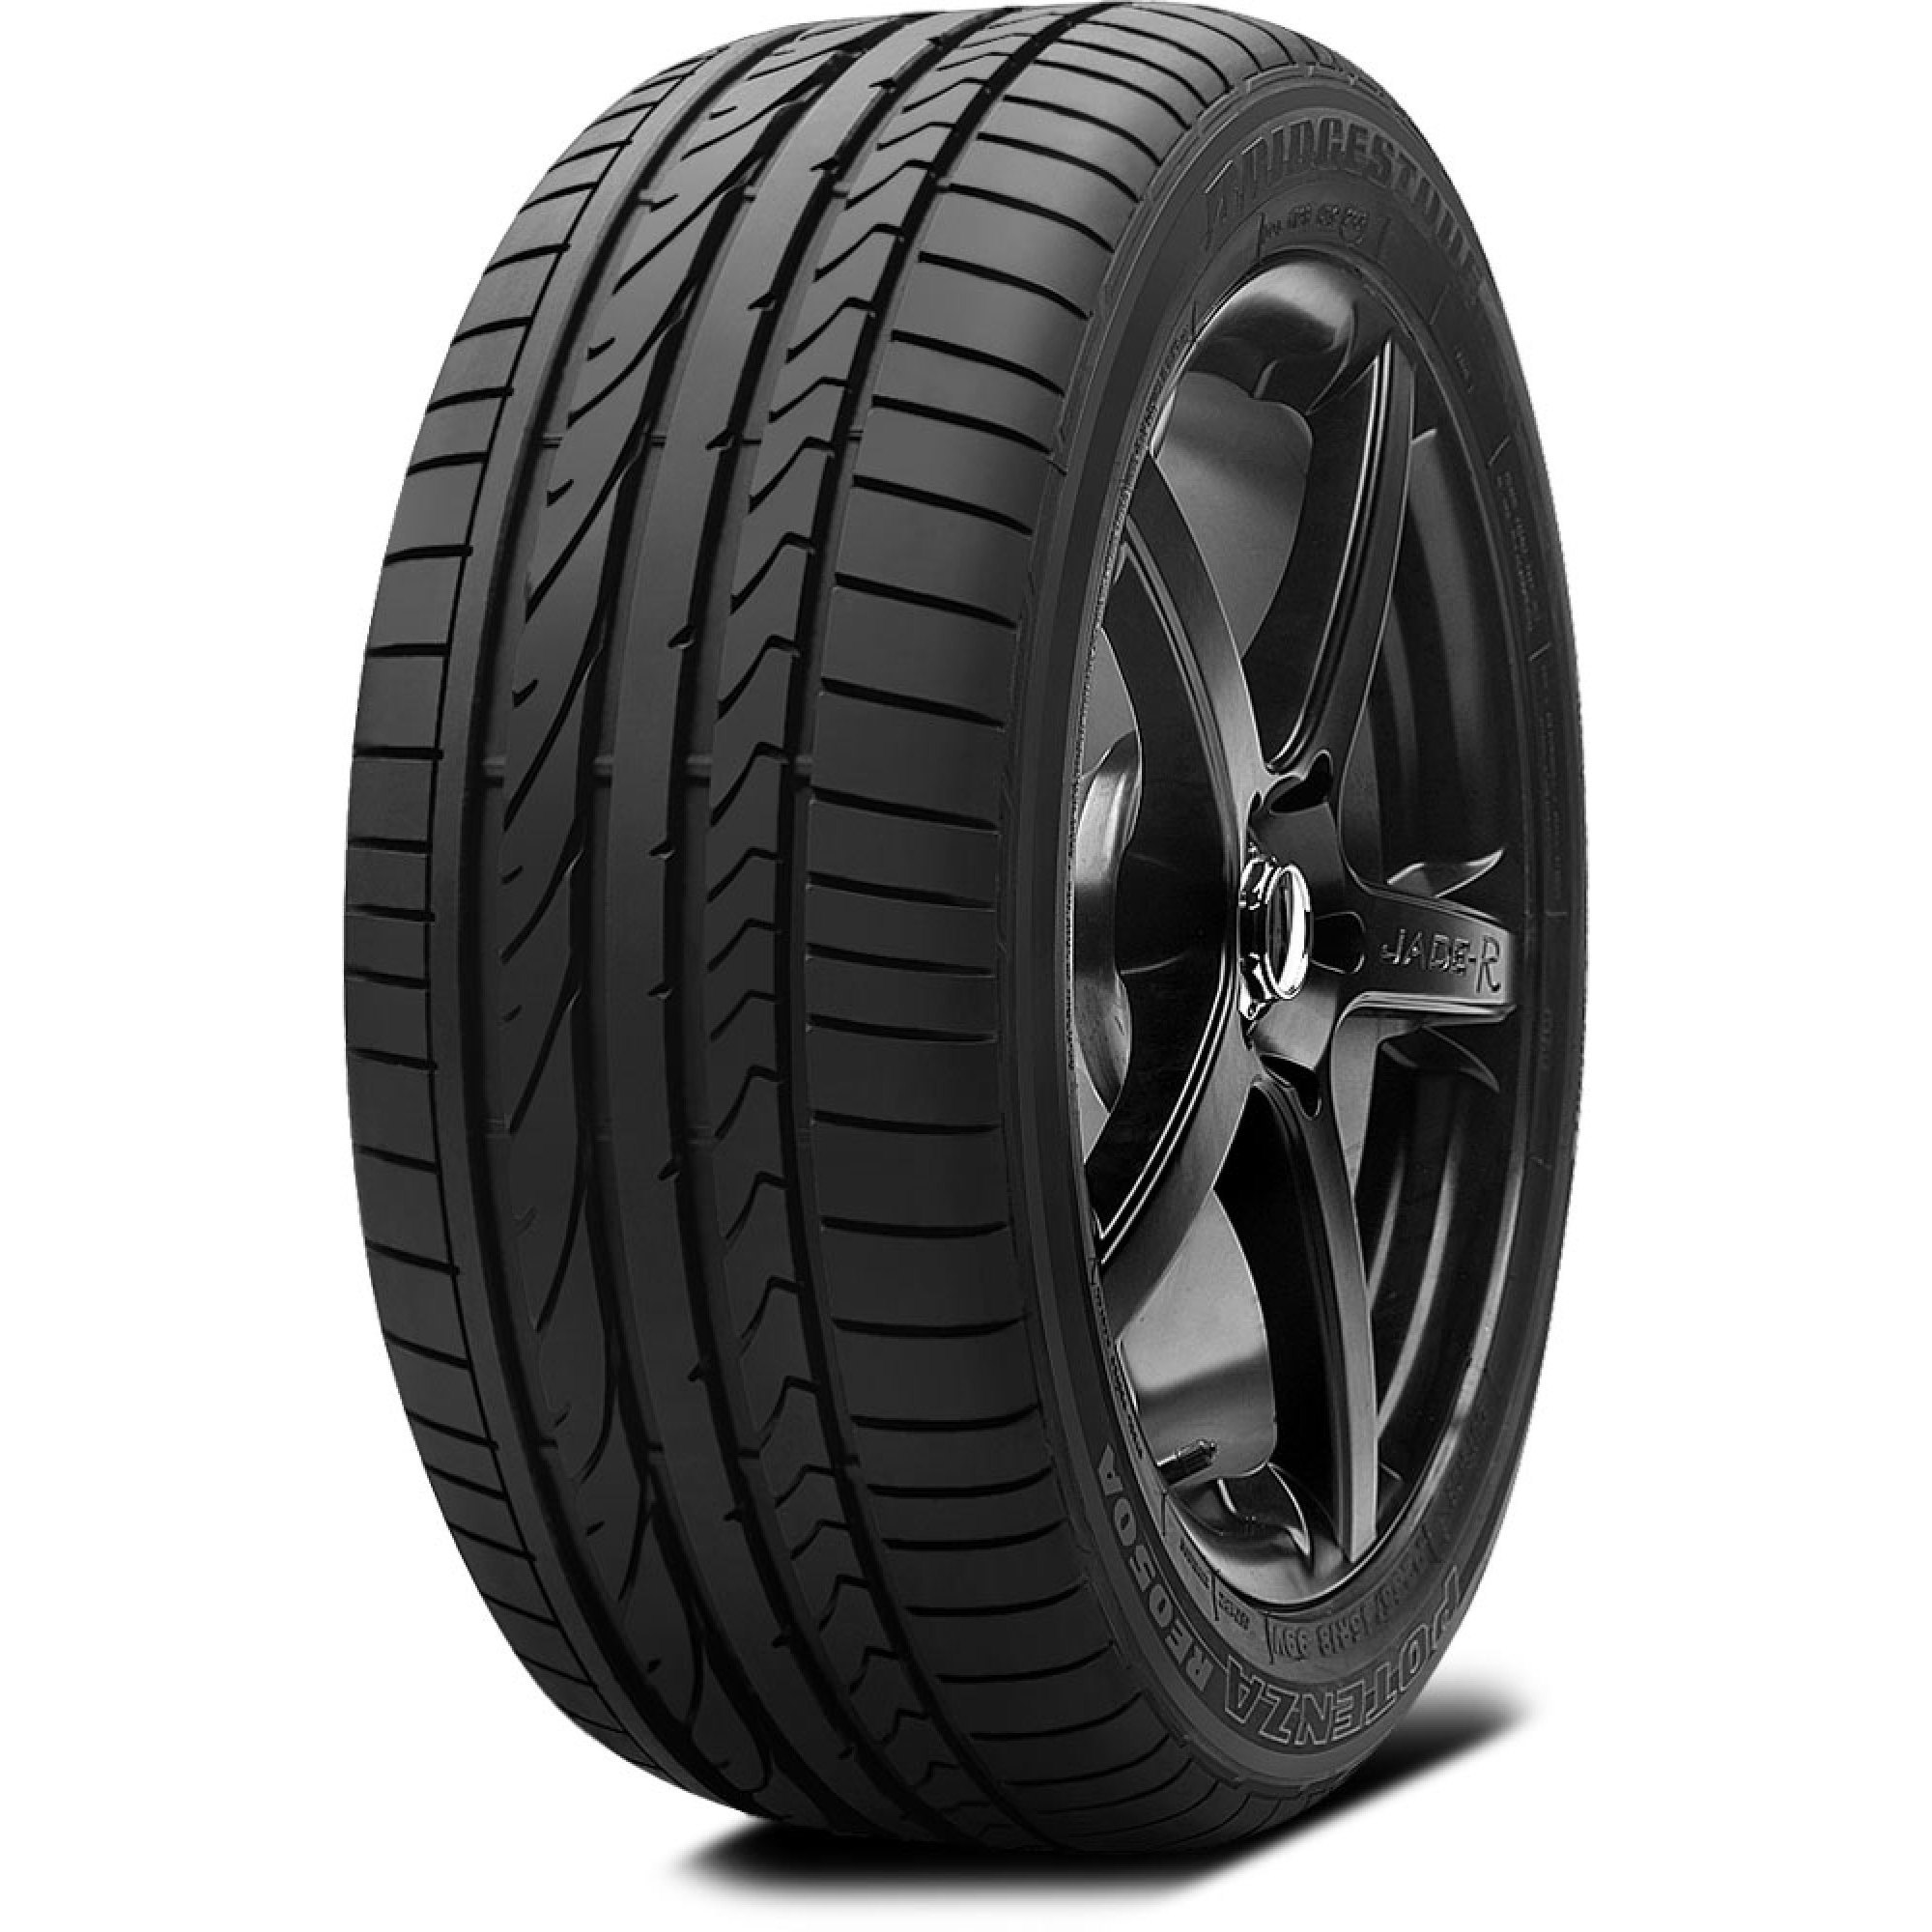 What Tires Does Bridgestone Make